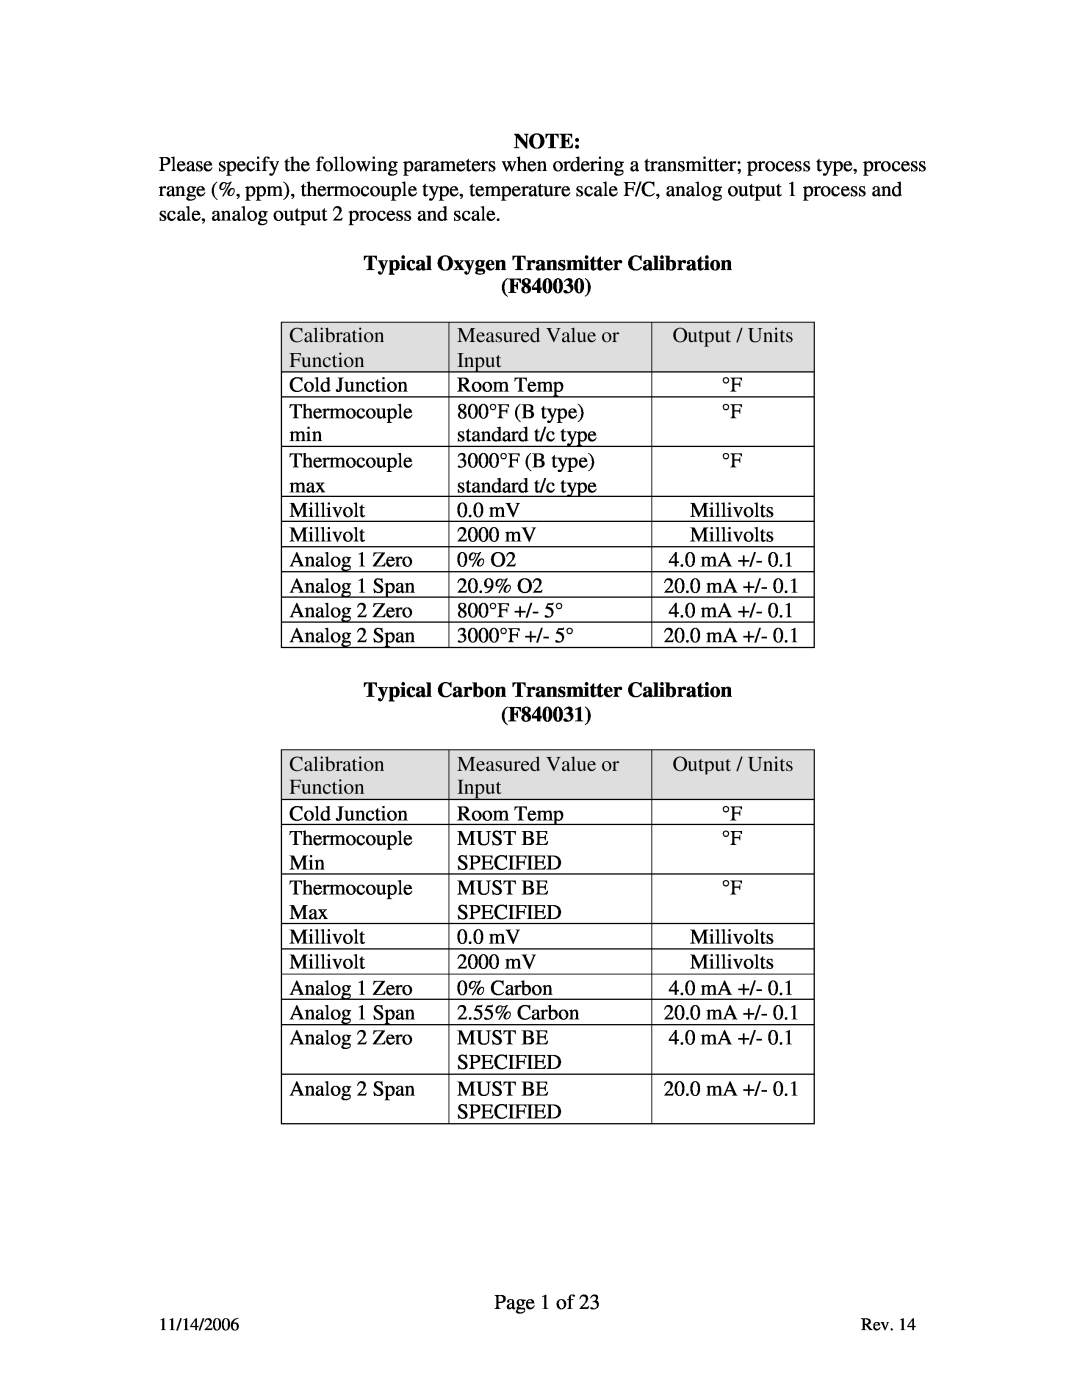 Marathon F200060 manual Typical Oxygen Transmitter Calibration F840030, Typical Carbon Transmitter Calibration, F840031 